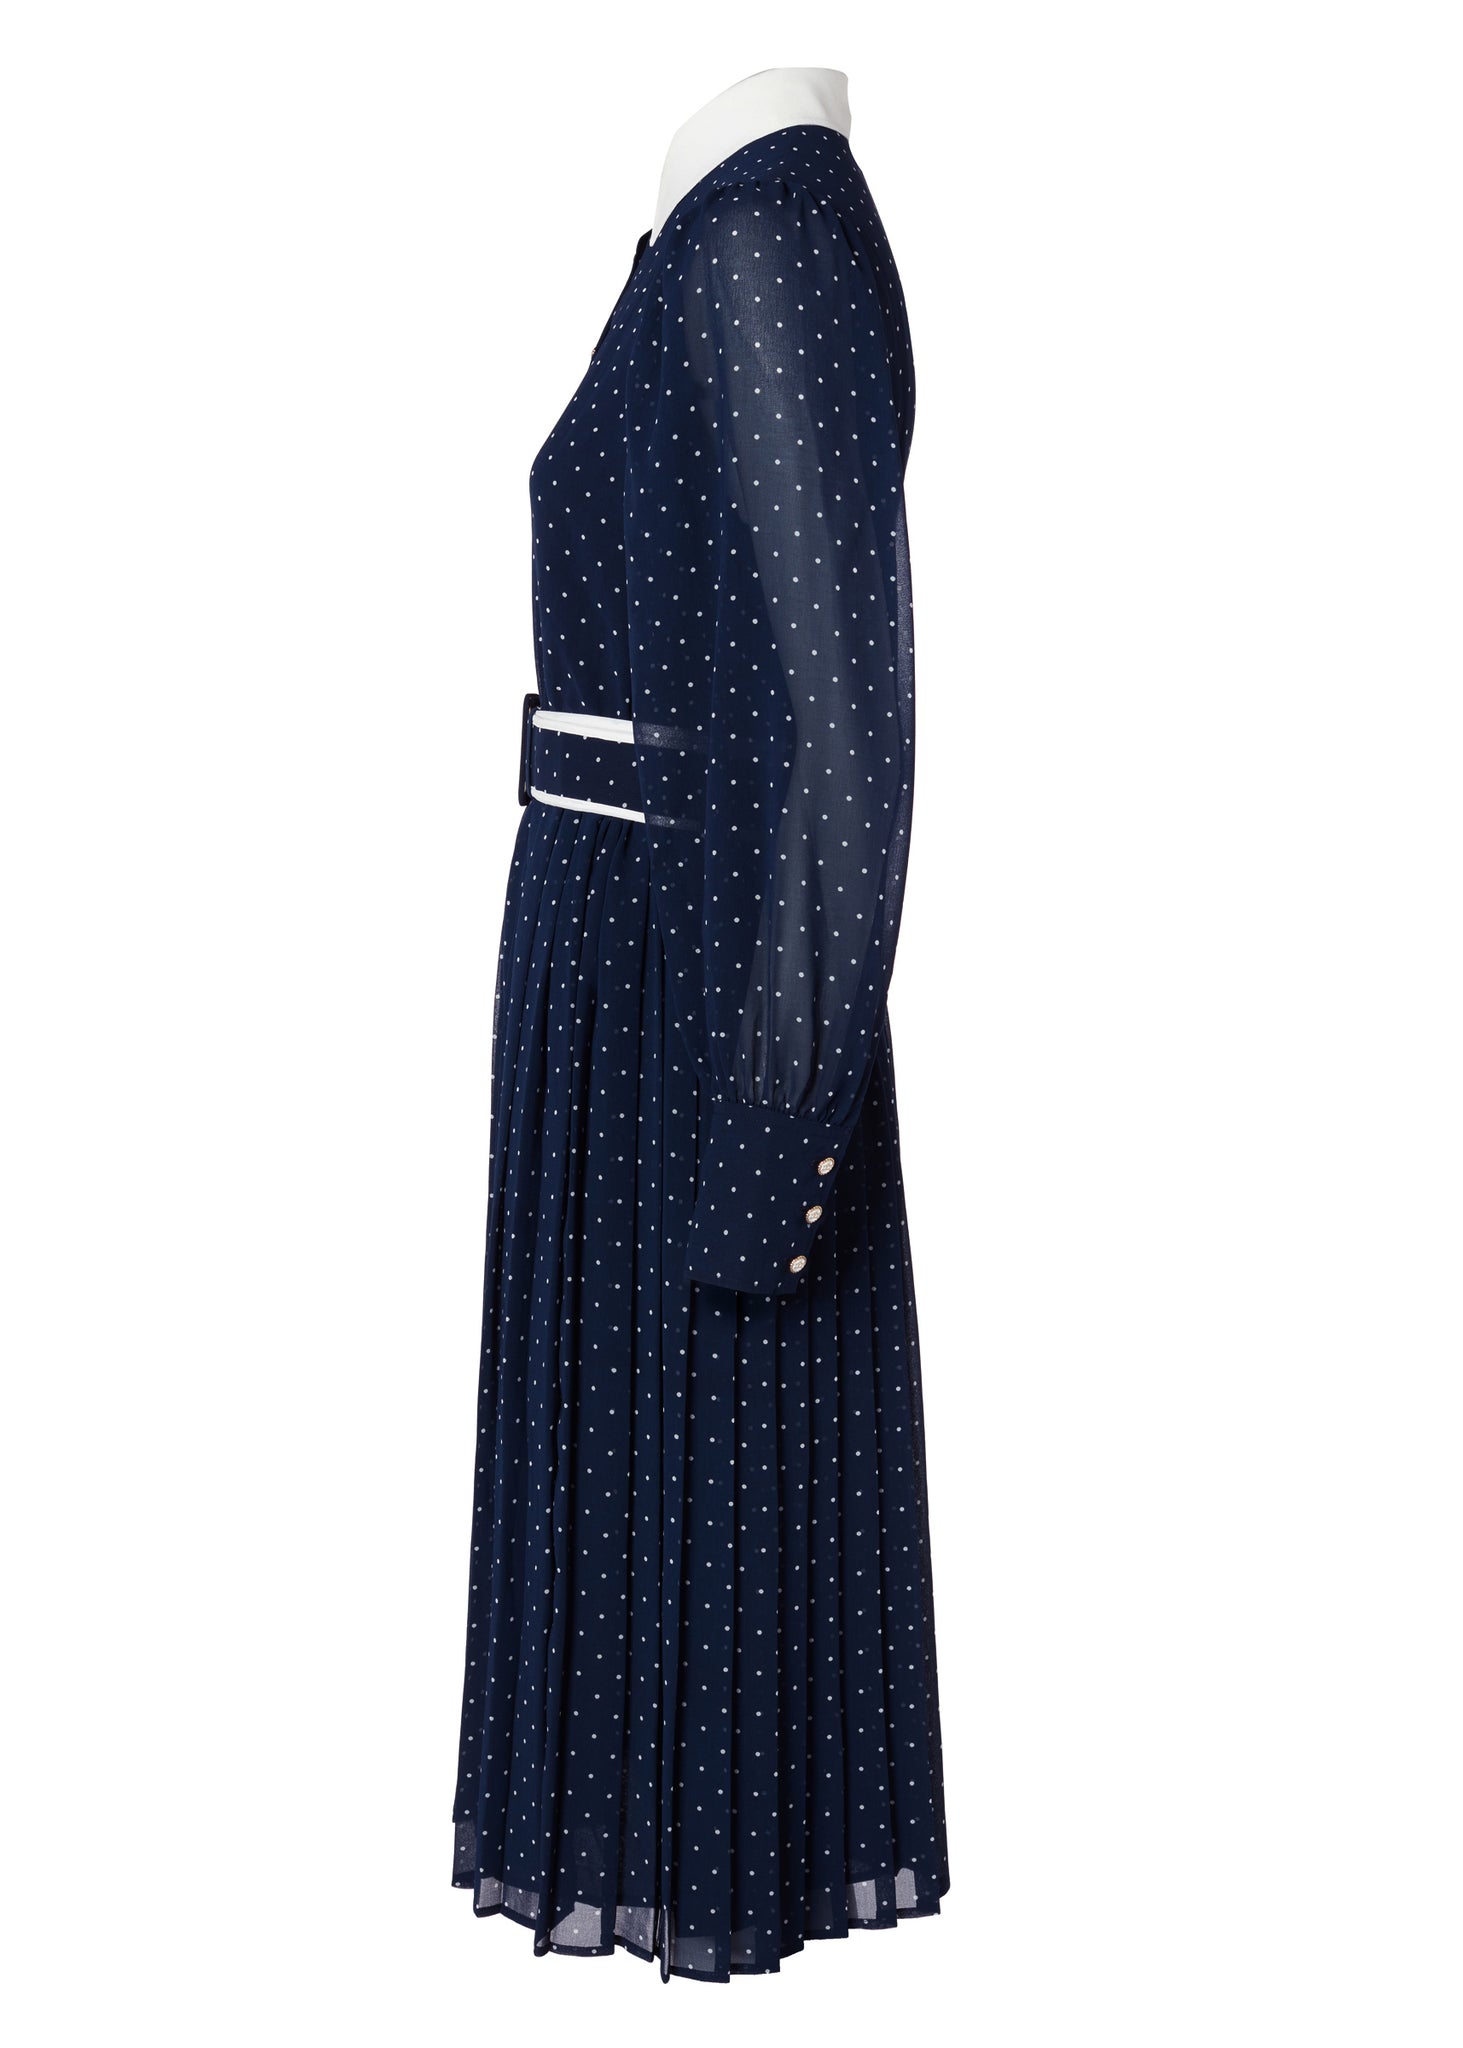 Annabel Pleated Midi Dress (Ink Navy Polka Dot)